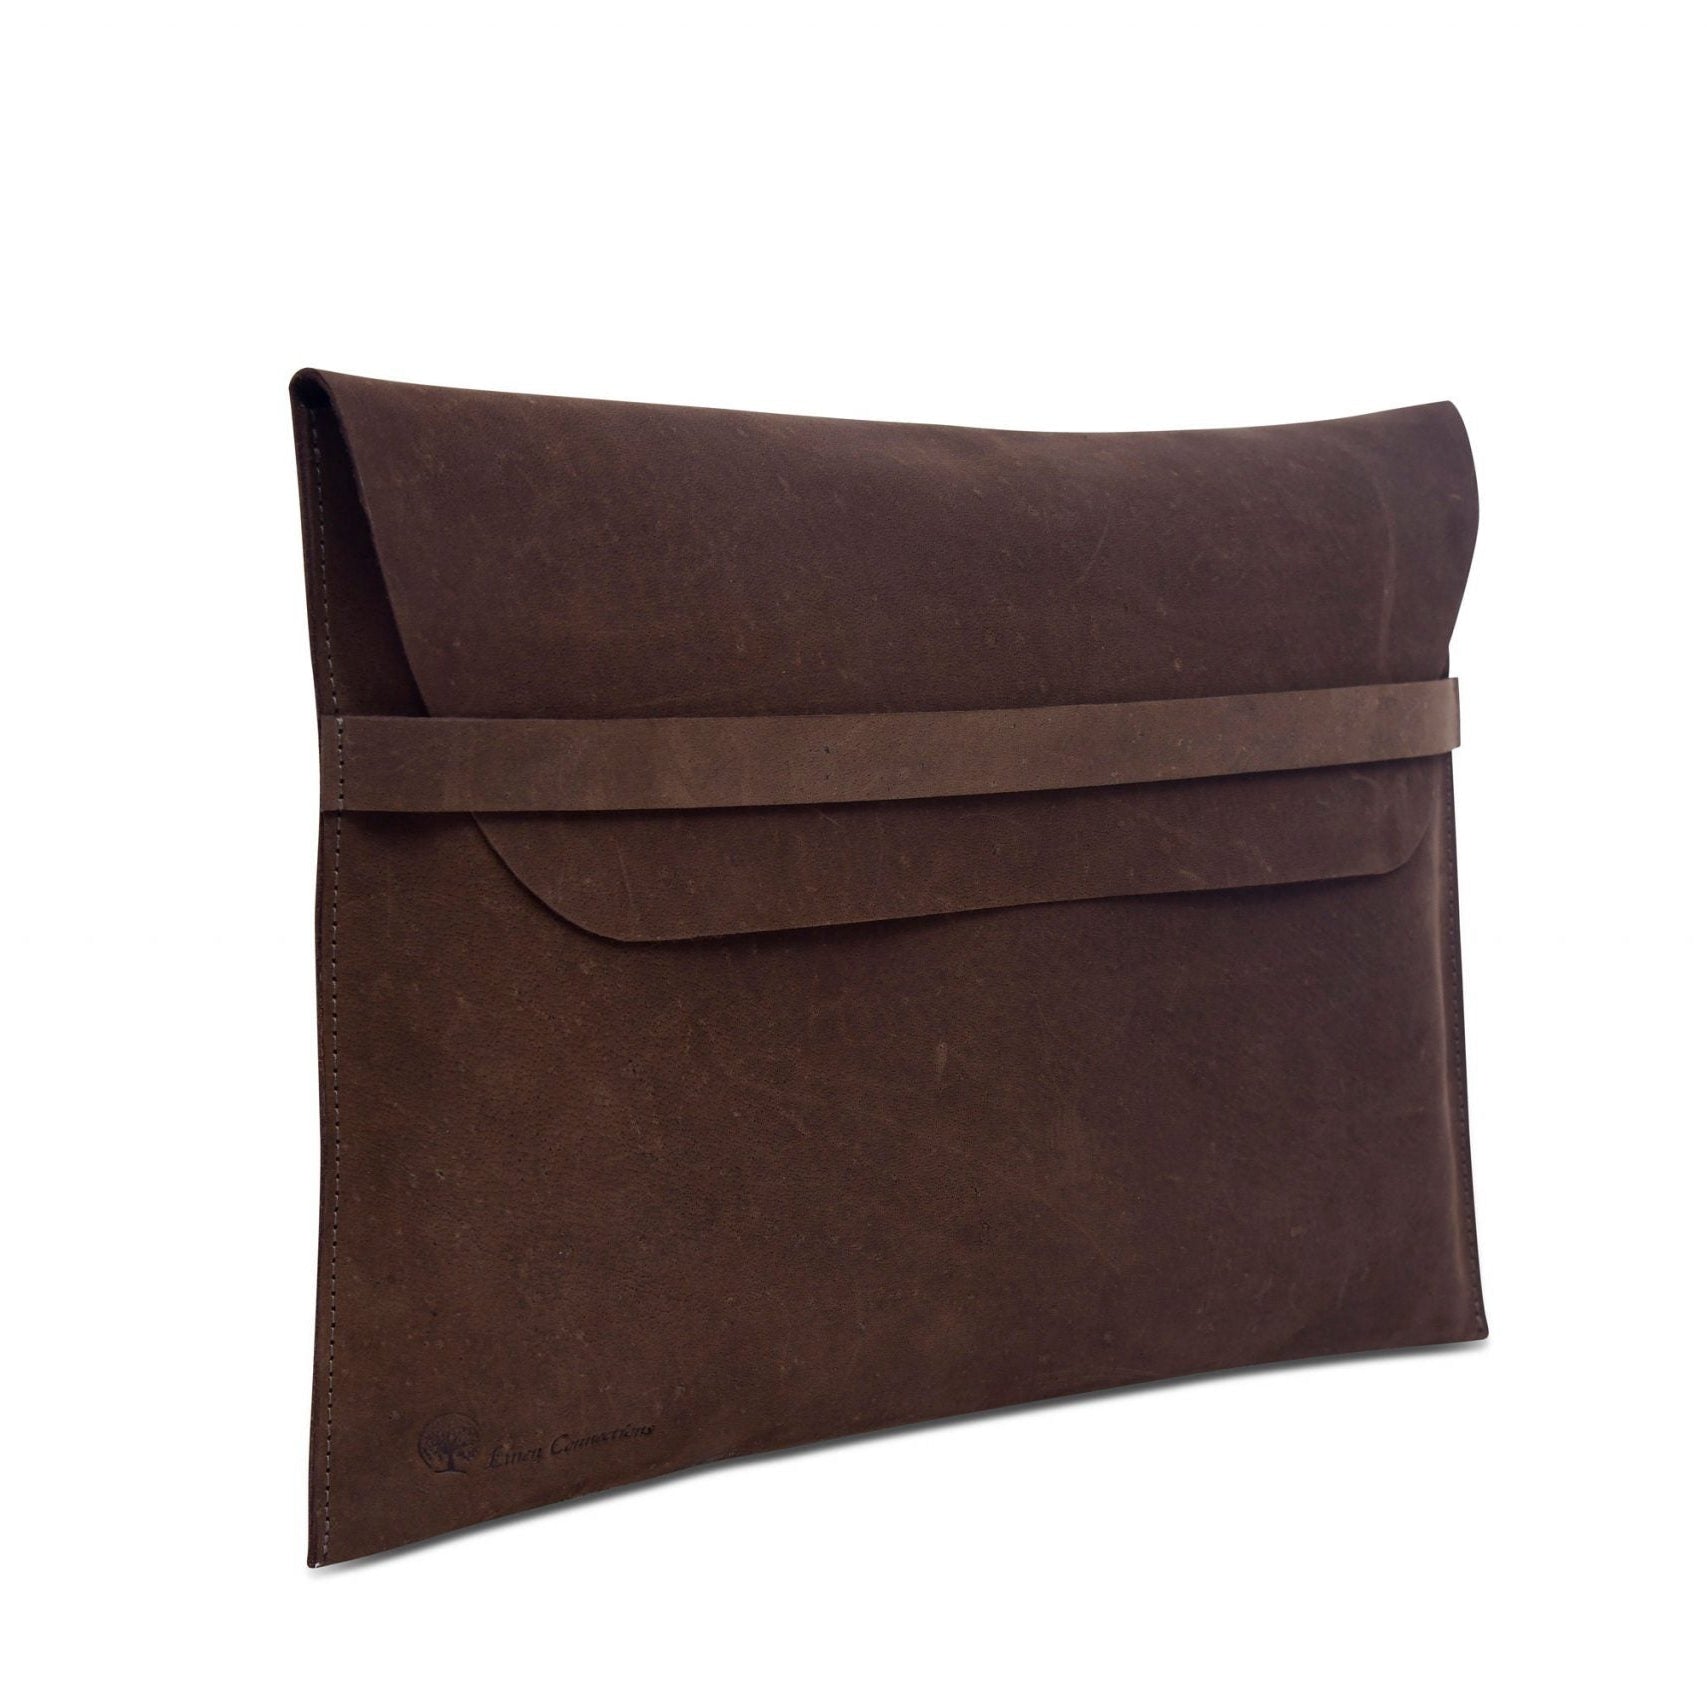 Handmade Genuine Leather macbook sleeve case for 12 13 15 inch macbook